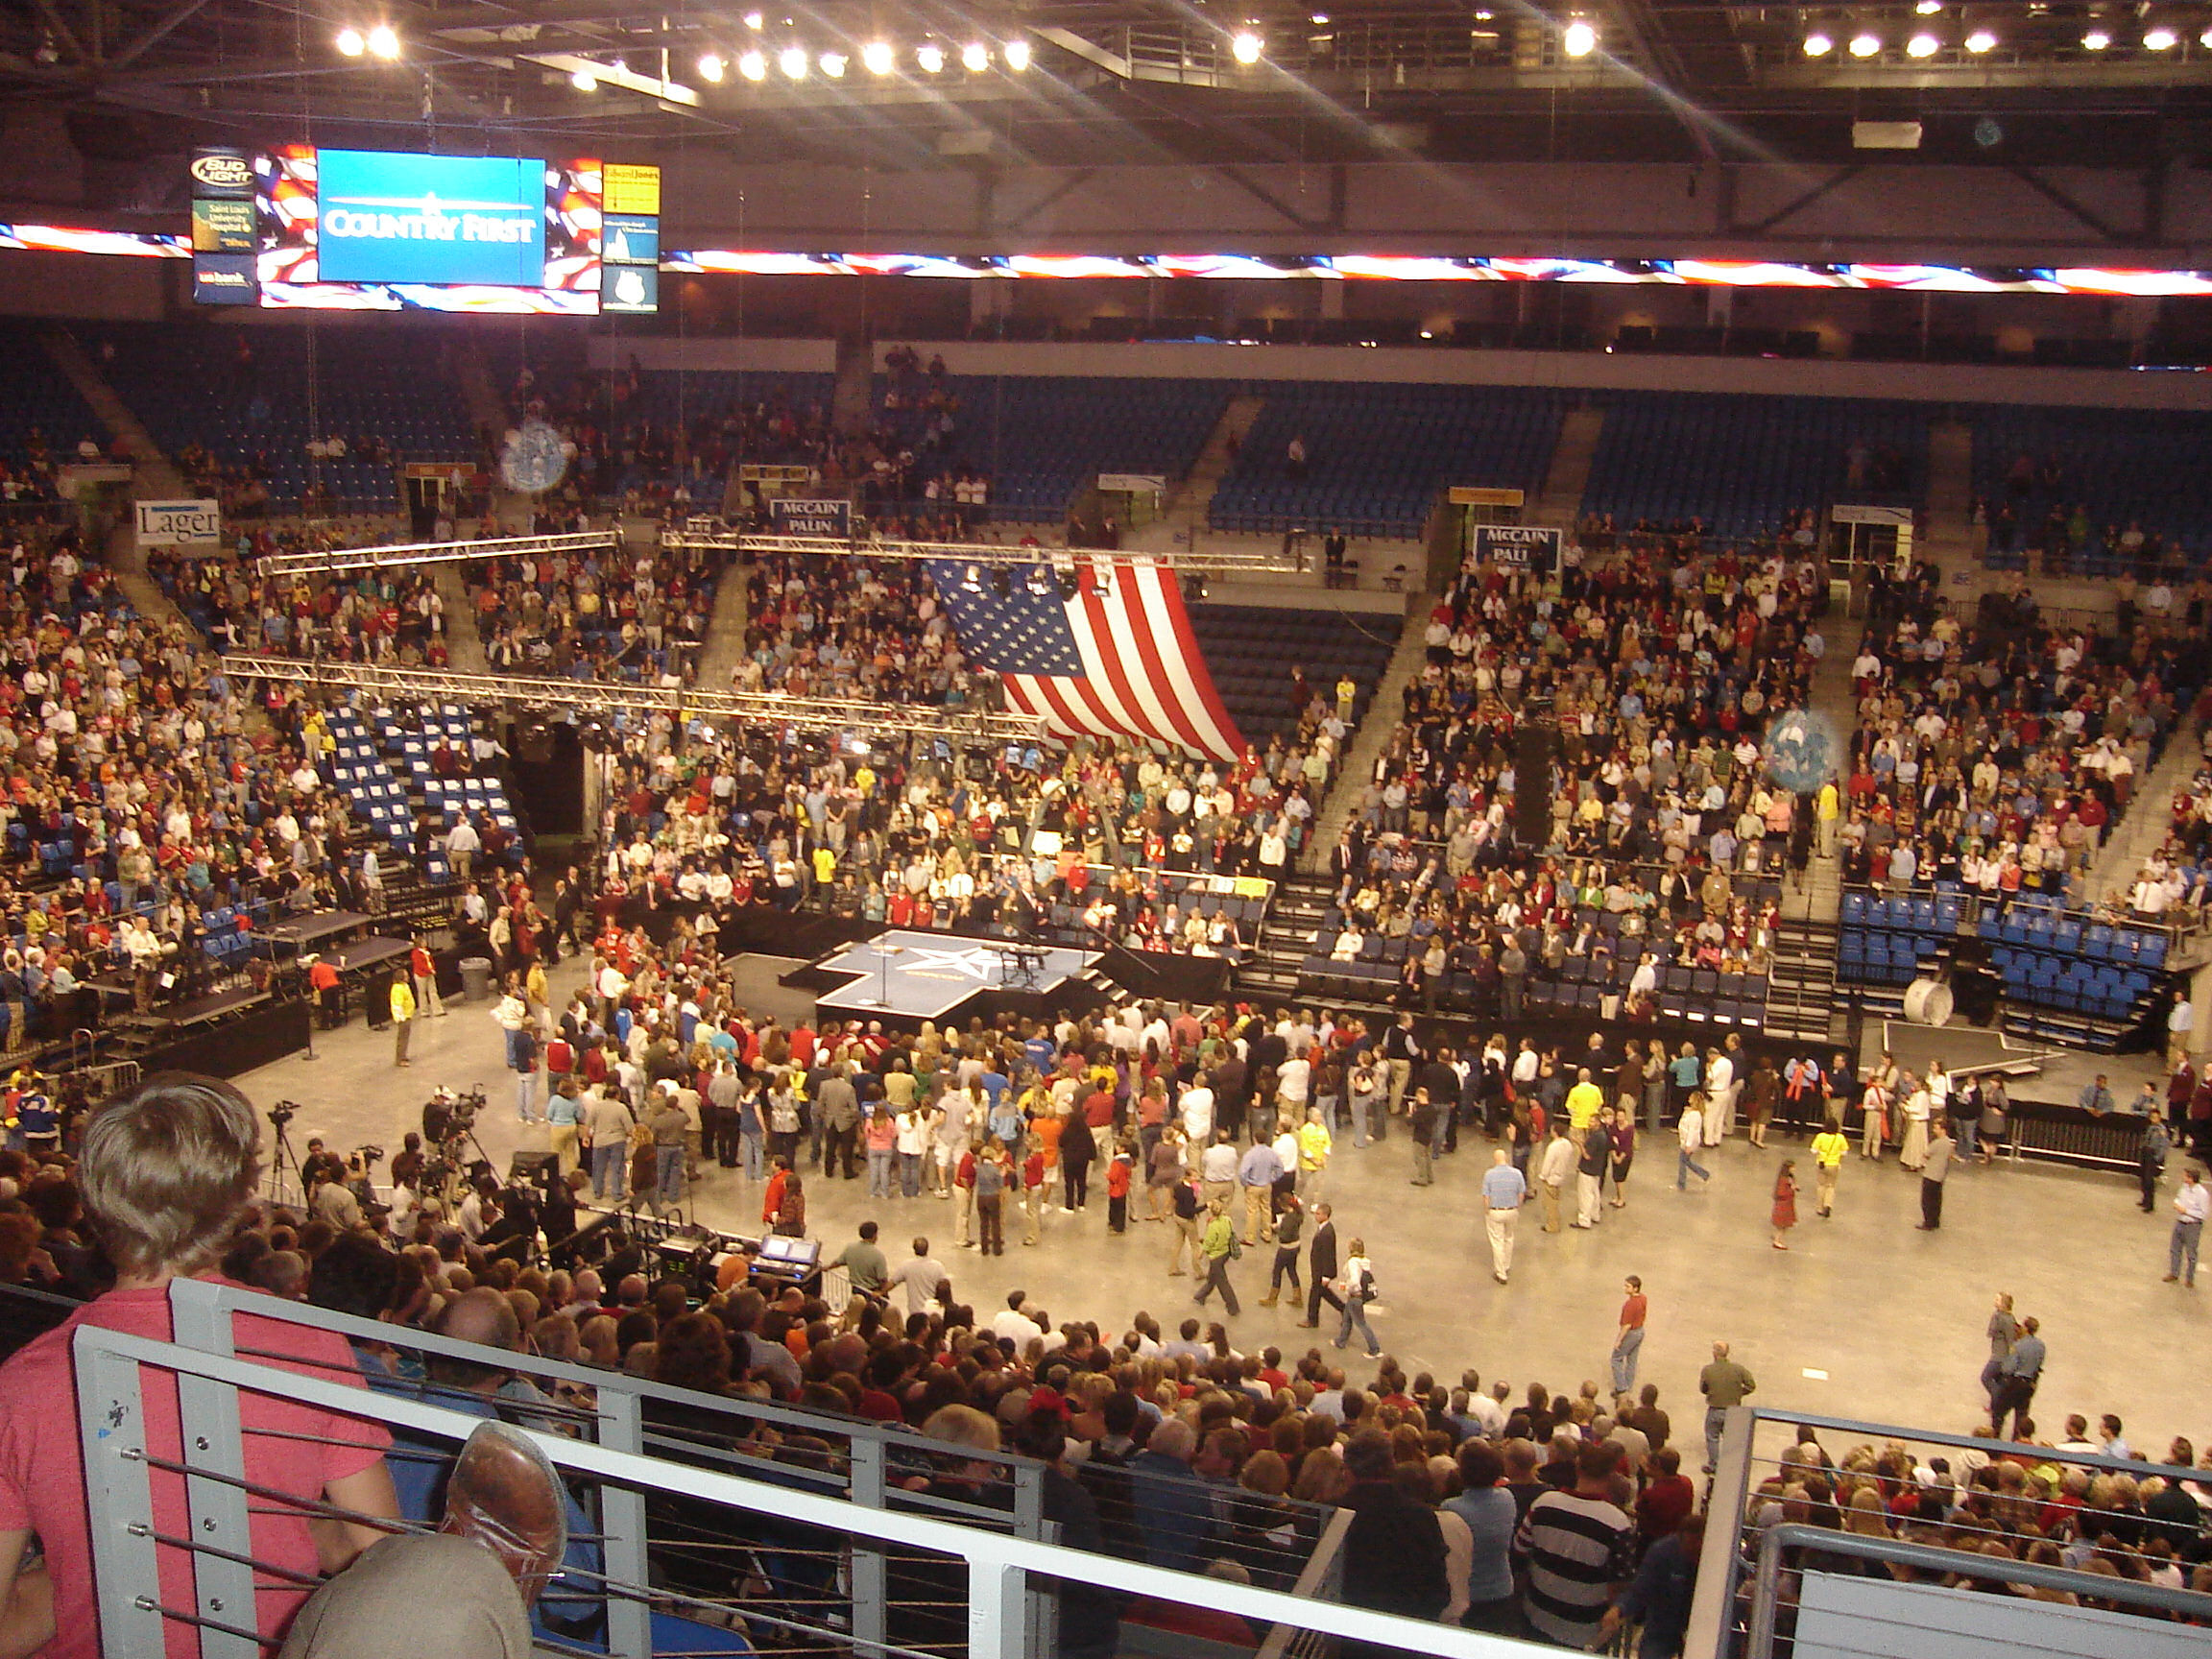 The Palin crowd